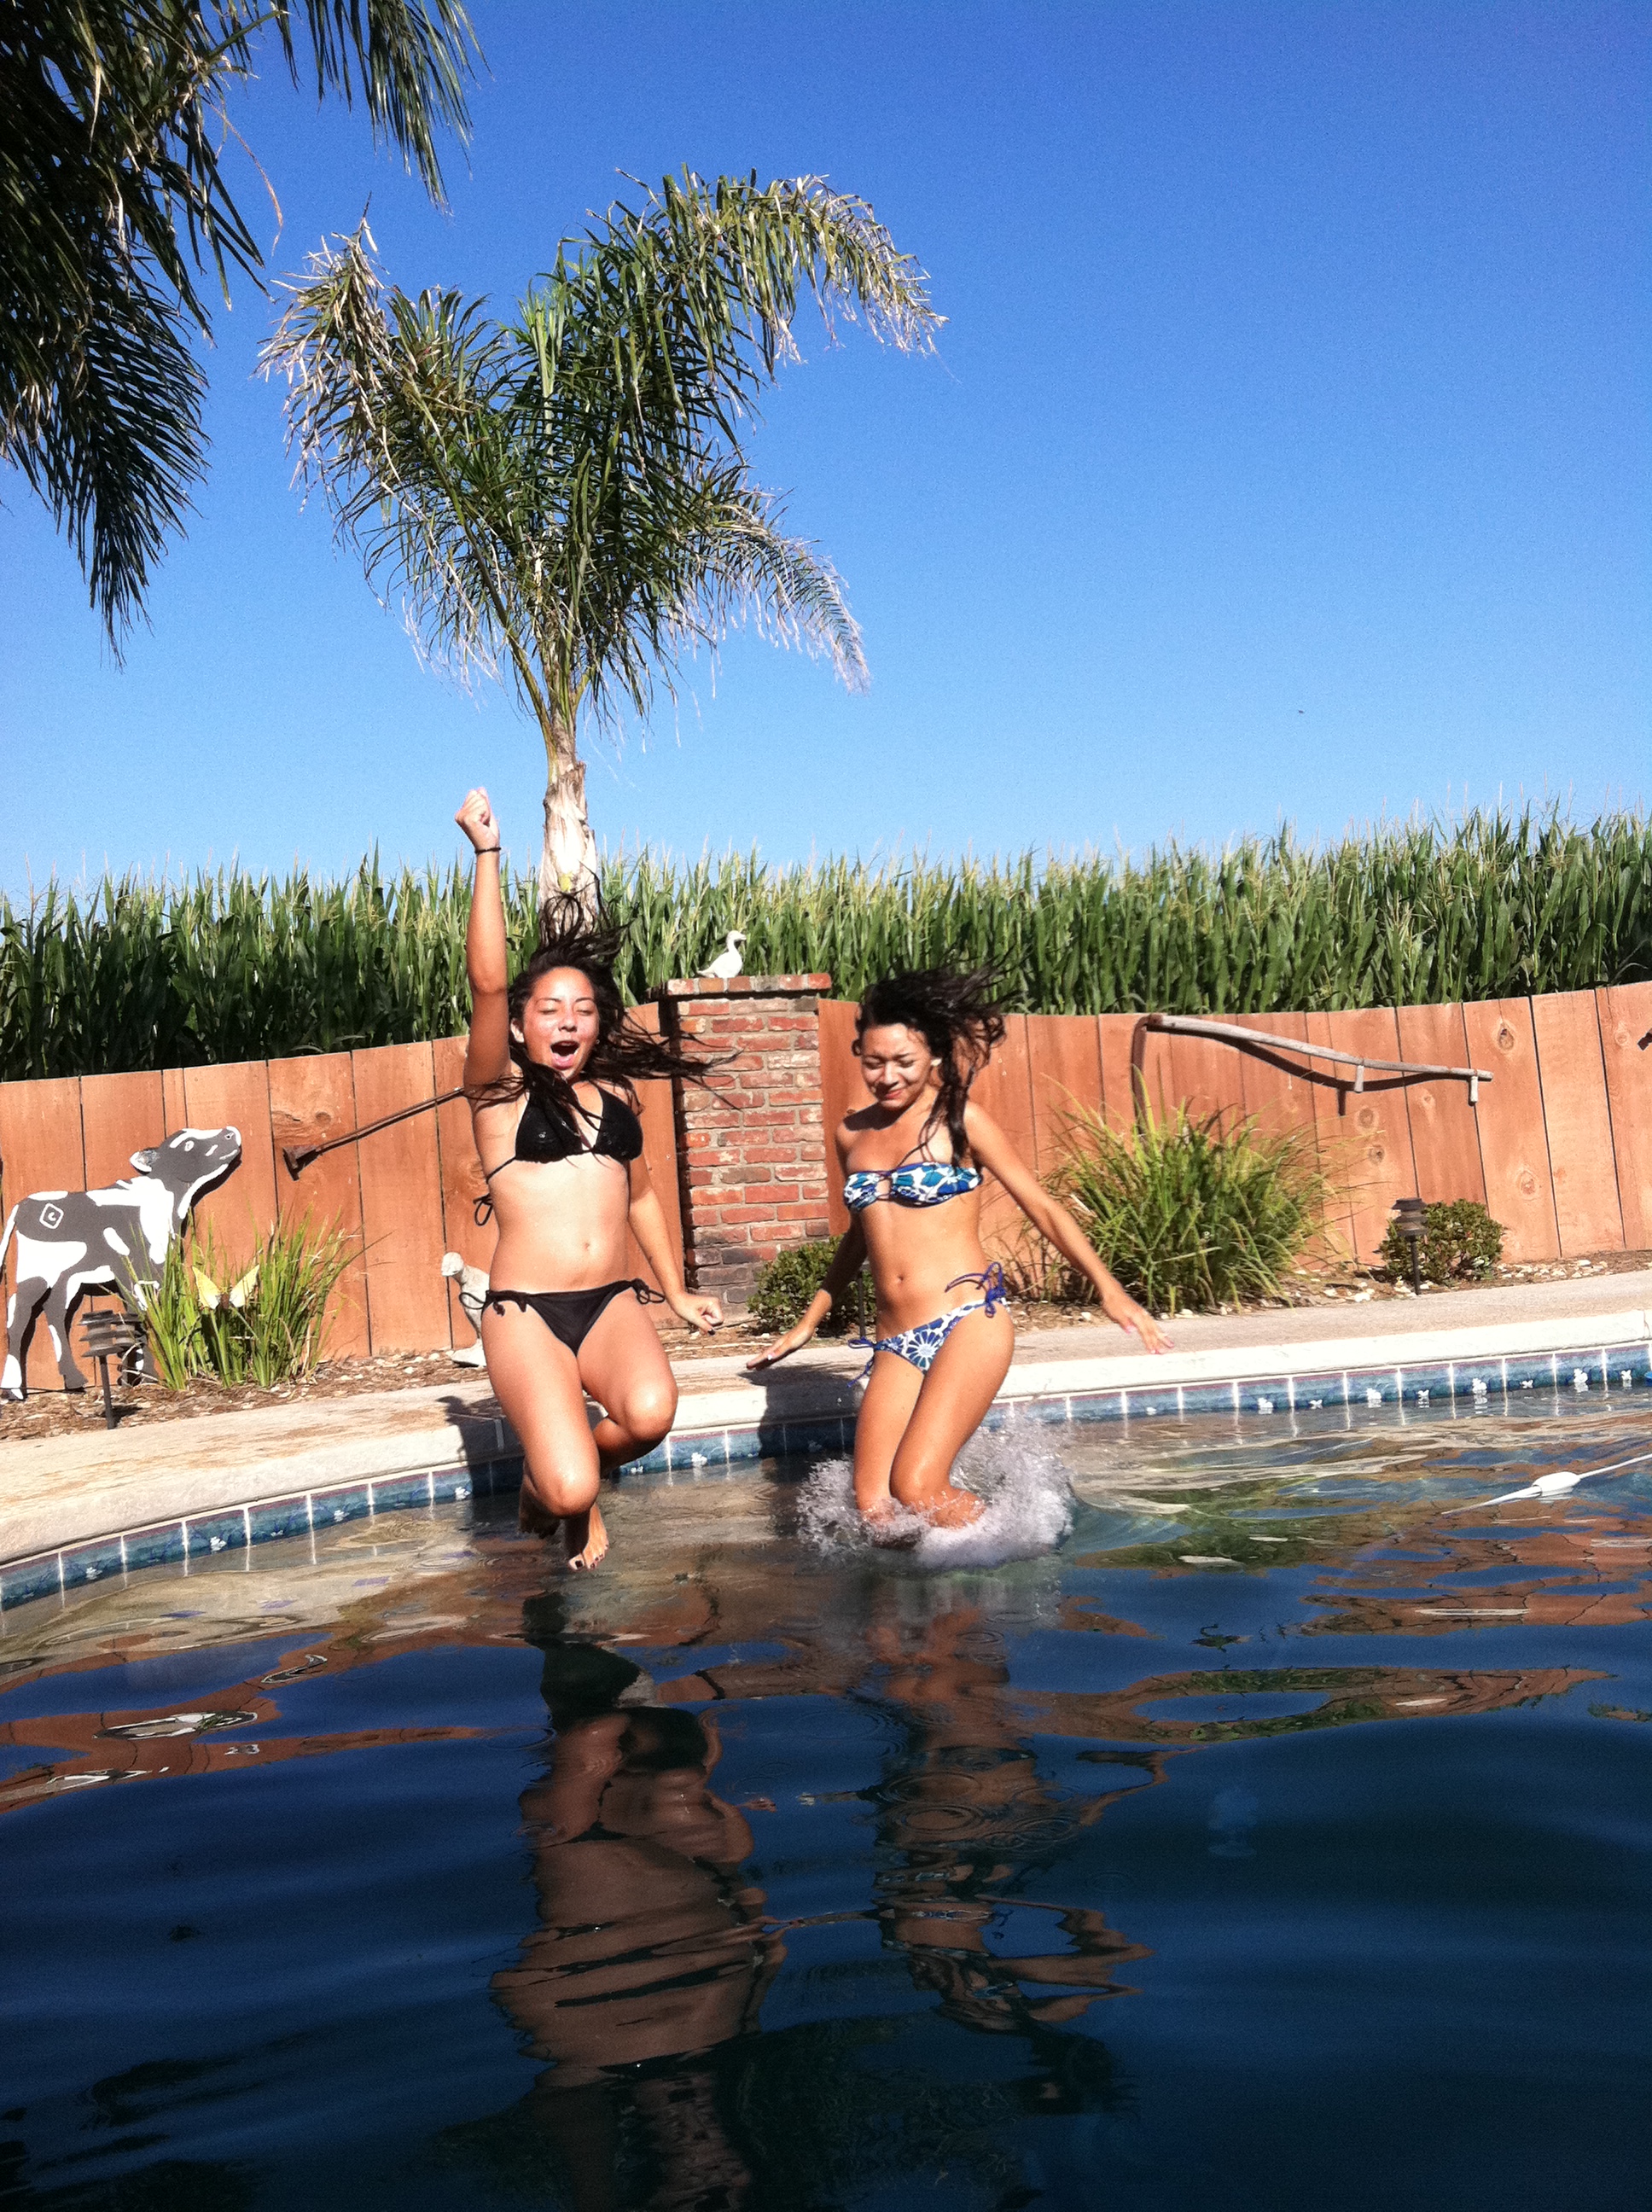 Fun at the pool, Bathing, Friends, Fun, Girls, HQ Photo